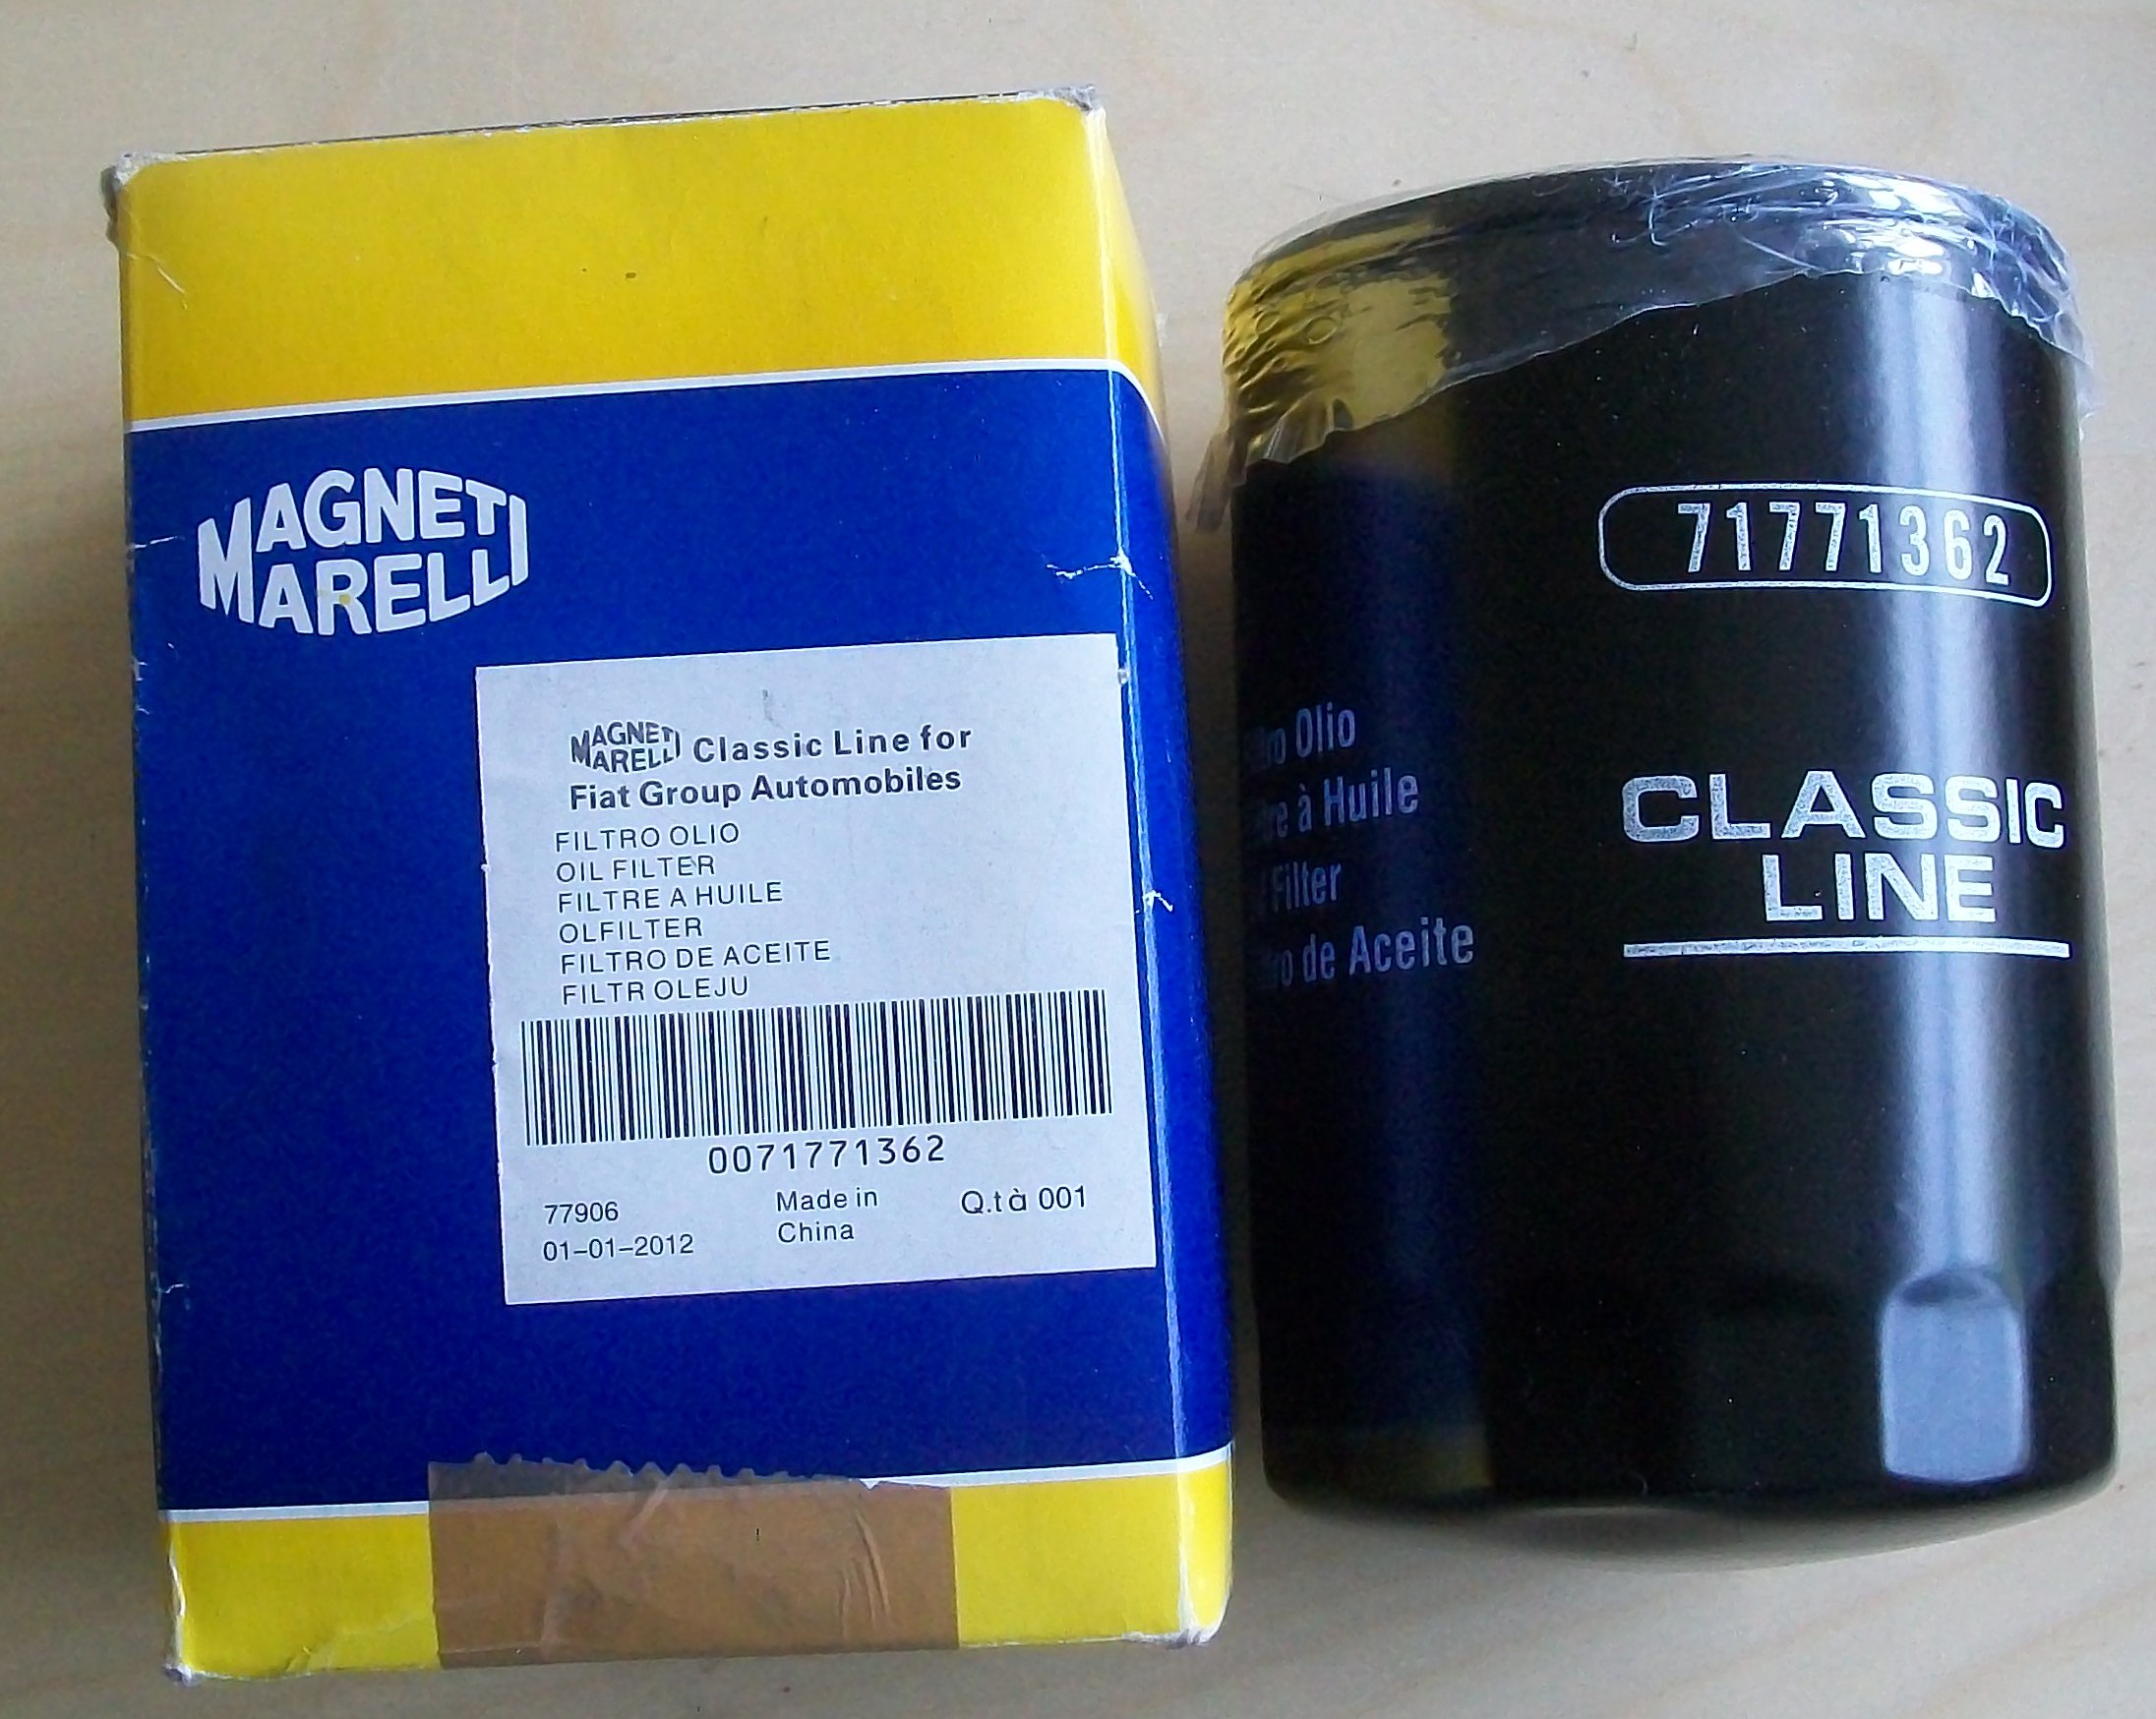 magneti marelli oil filter guide